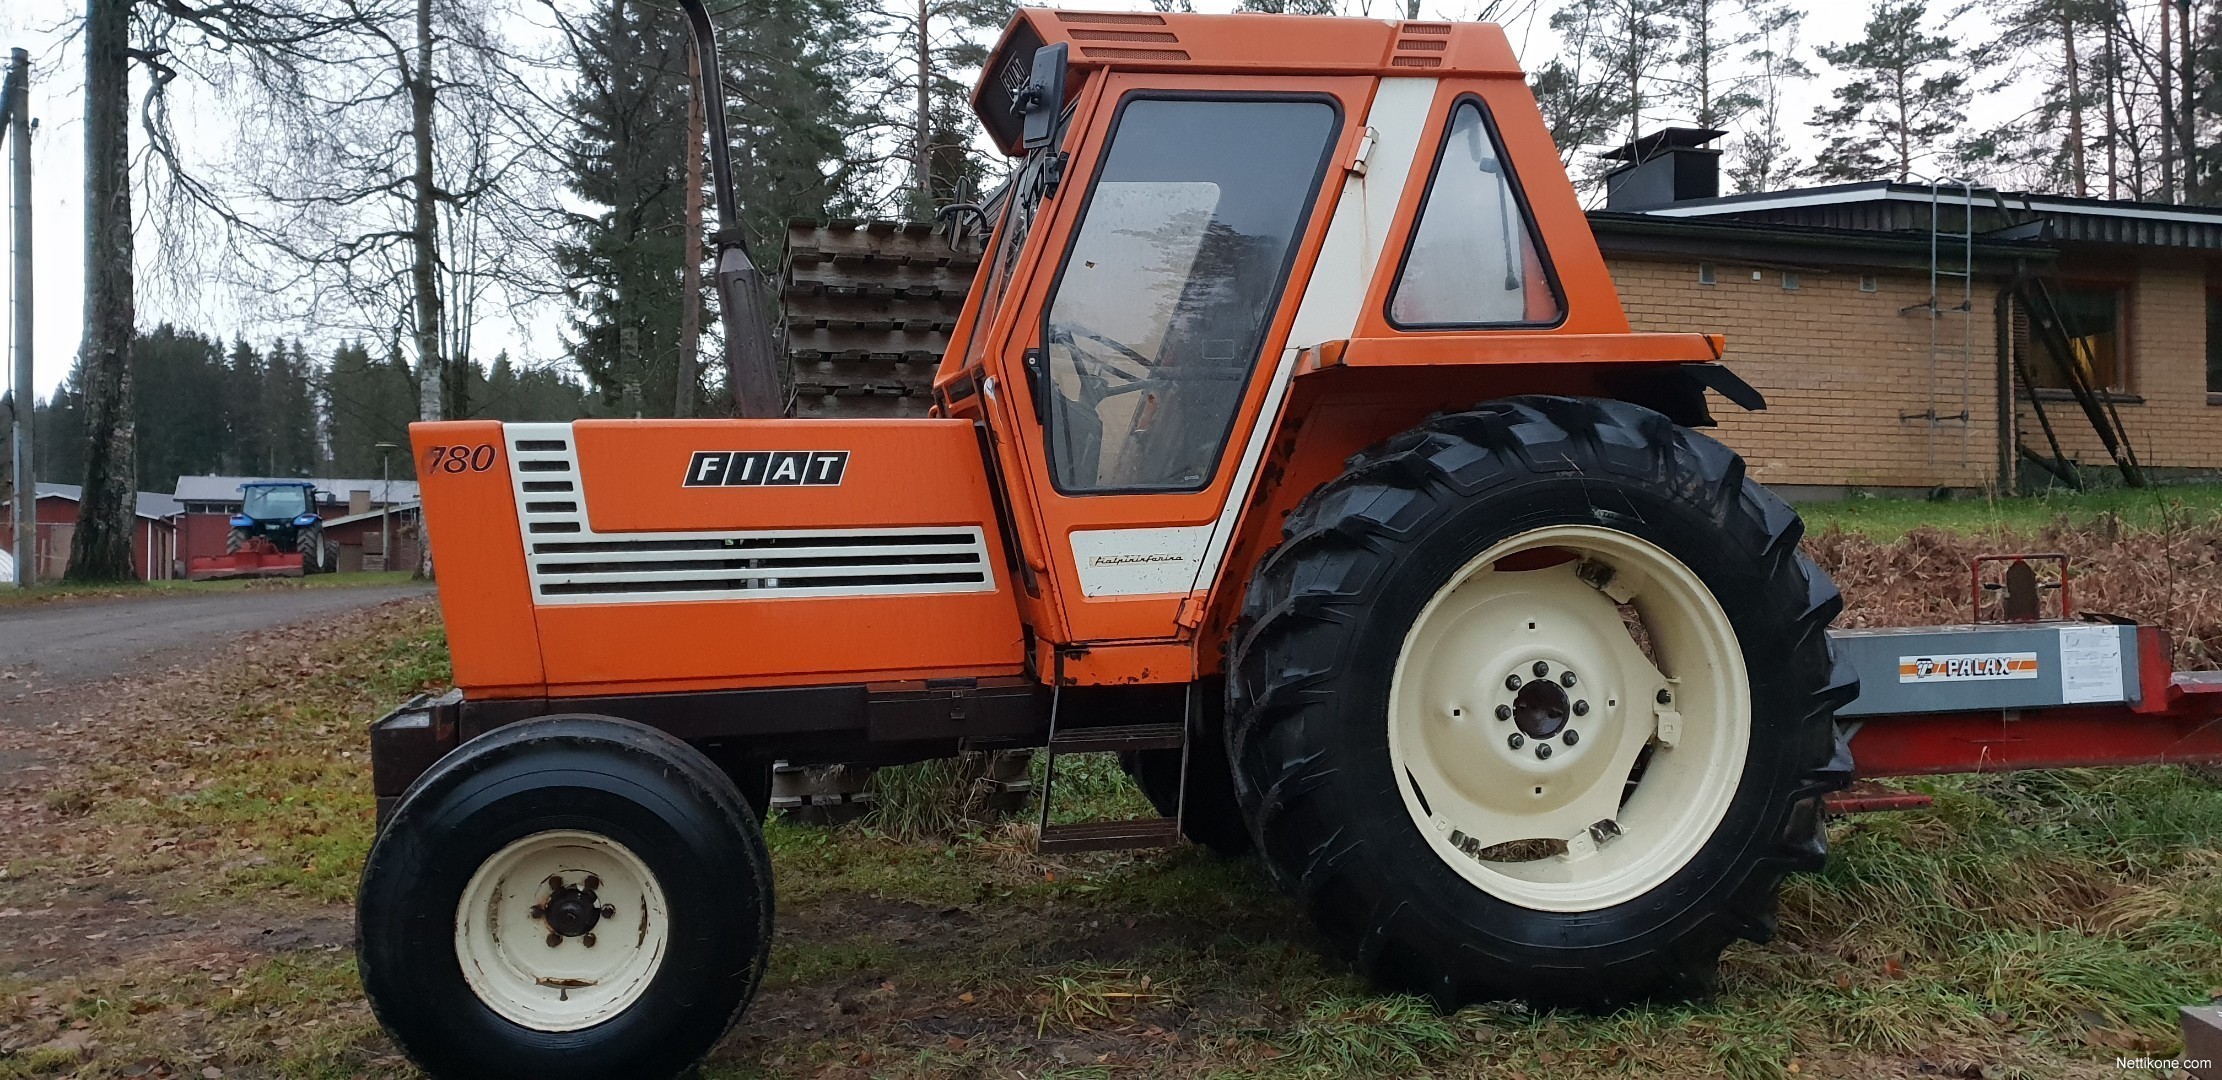 fiat-780-traktorit-1979-nettikone